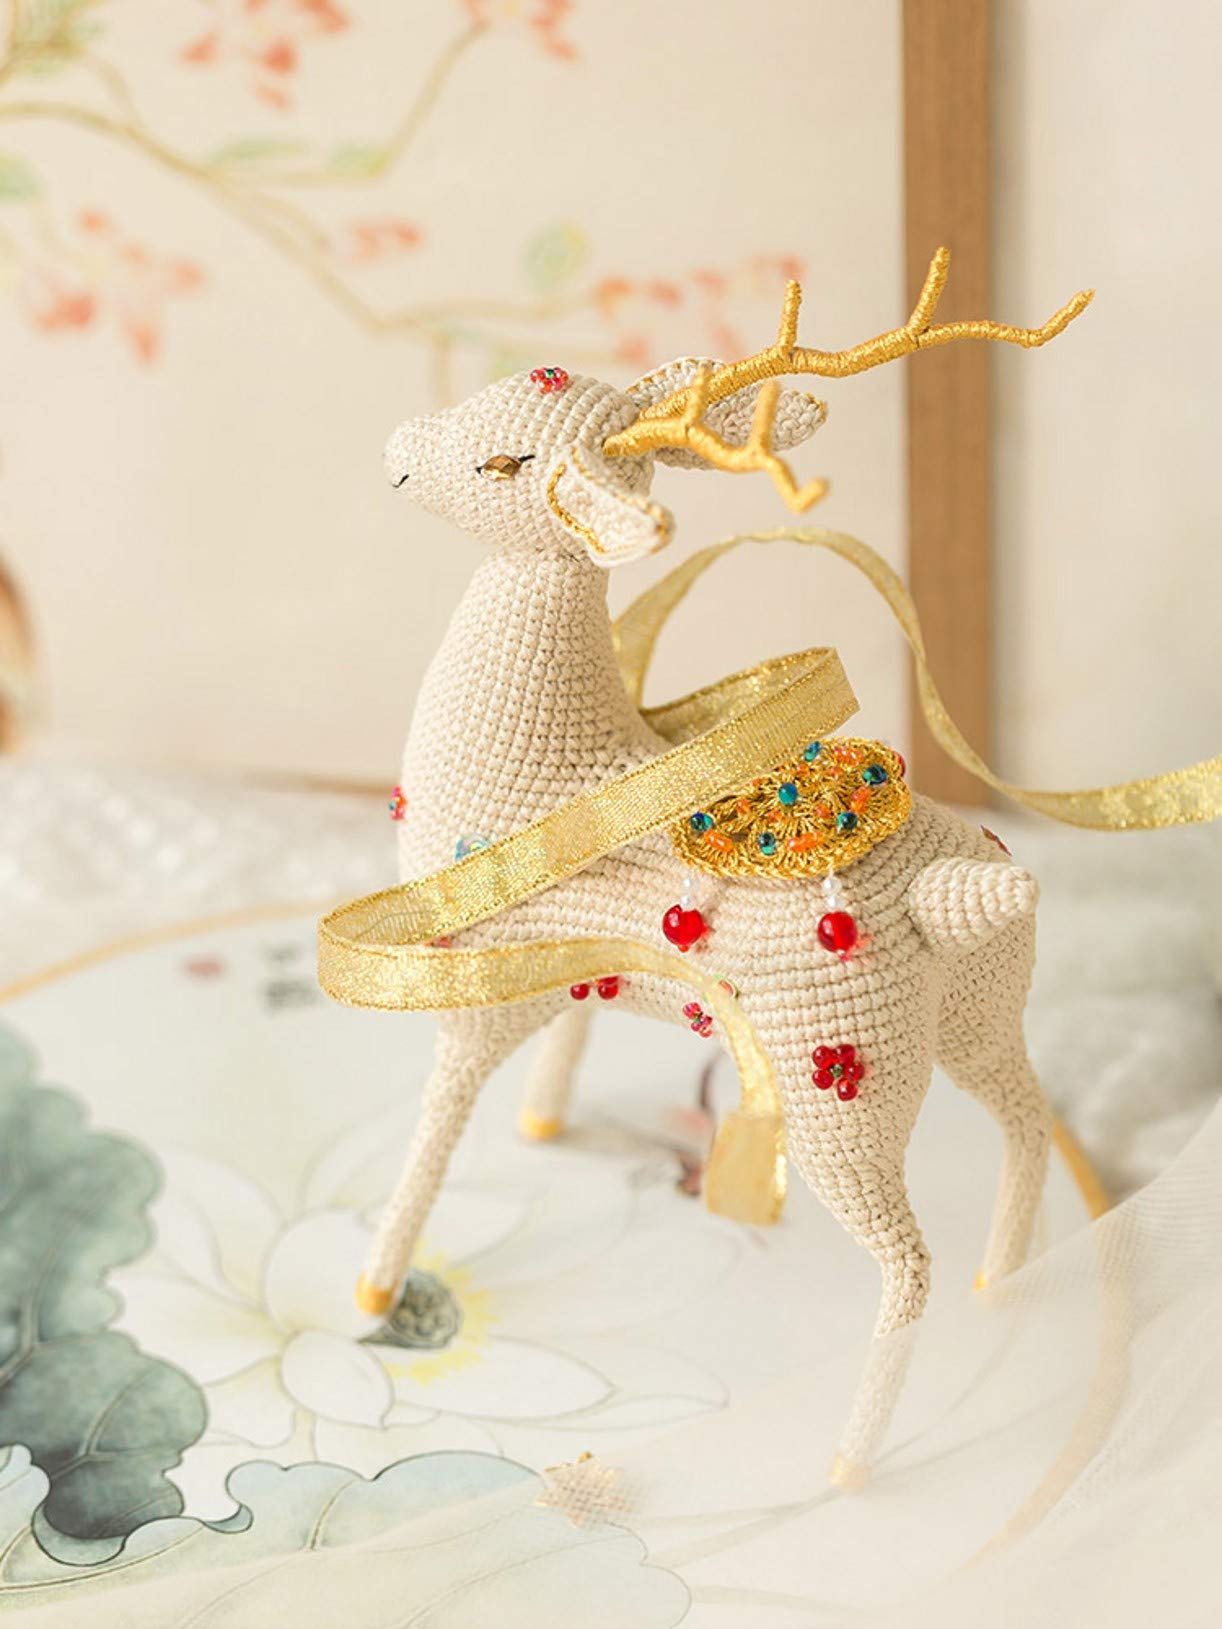 WellieSTR Easy Amigurumi: Crochet Fortune Deer Knitting Kit, Includes Crochet Yarn, Hook, and Needles